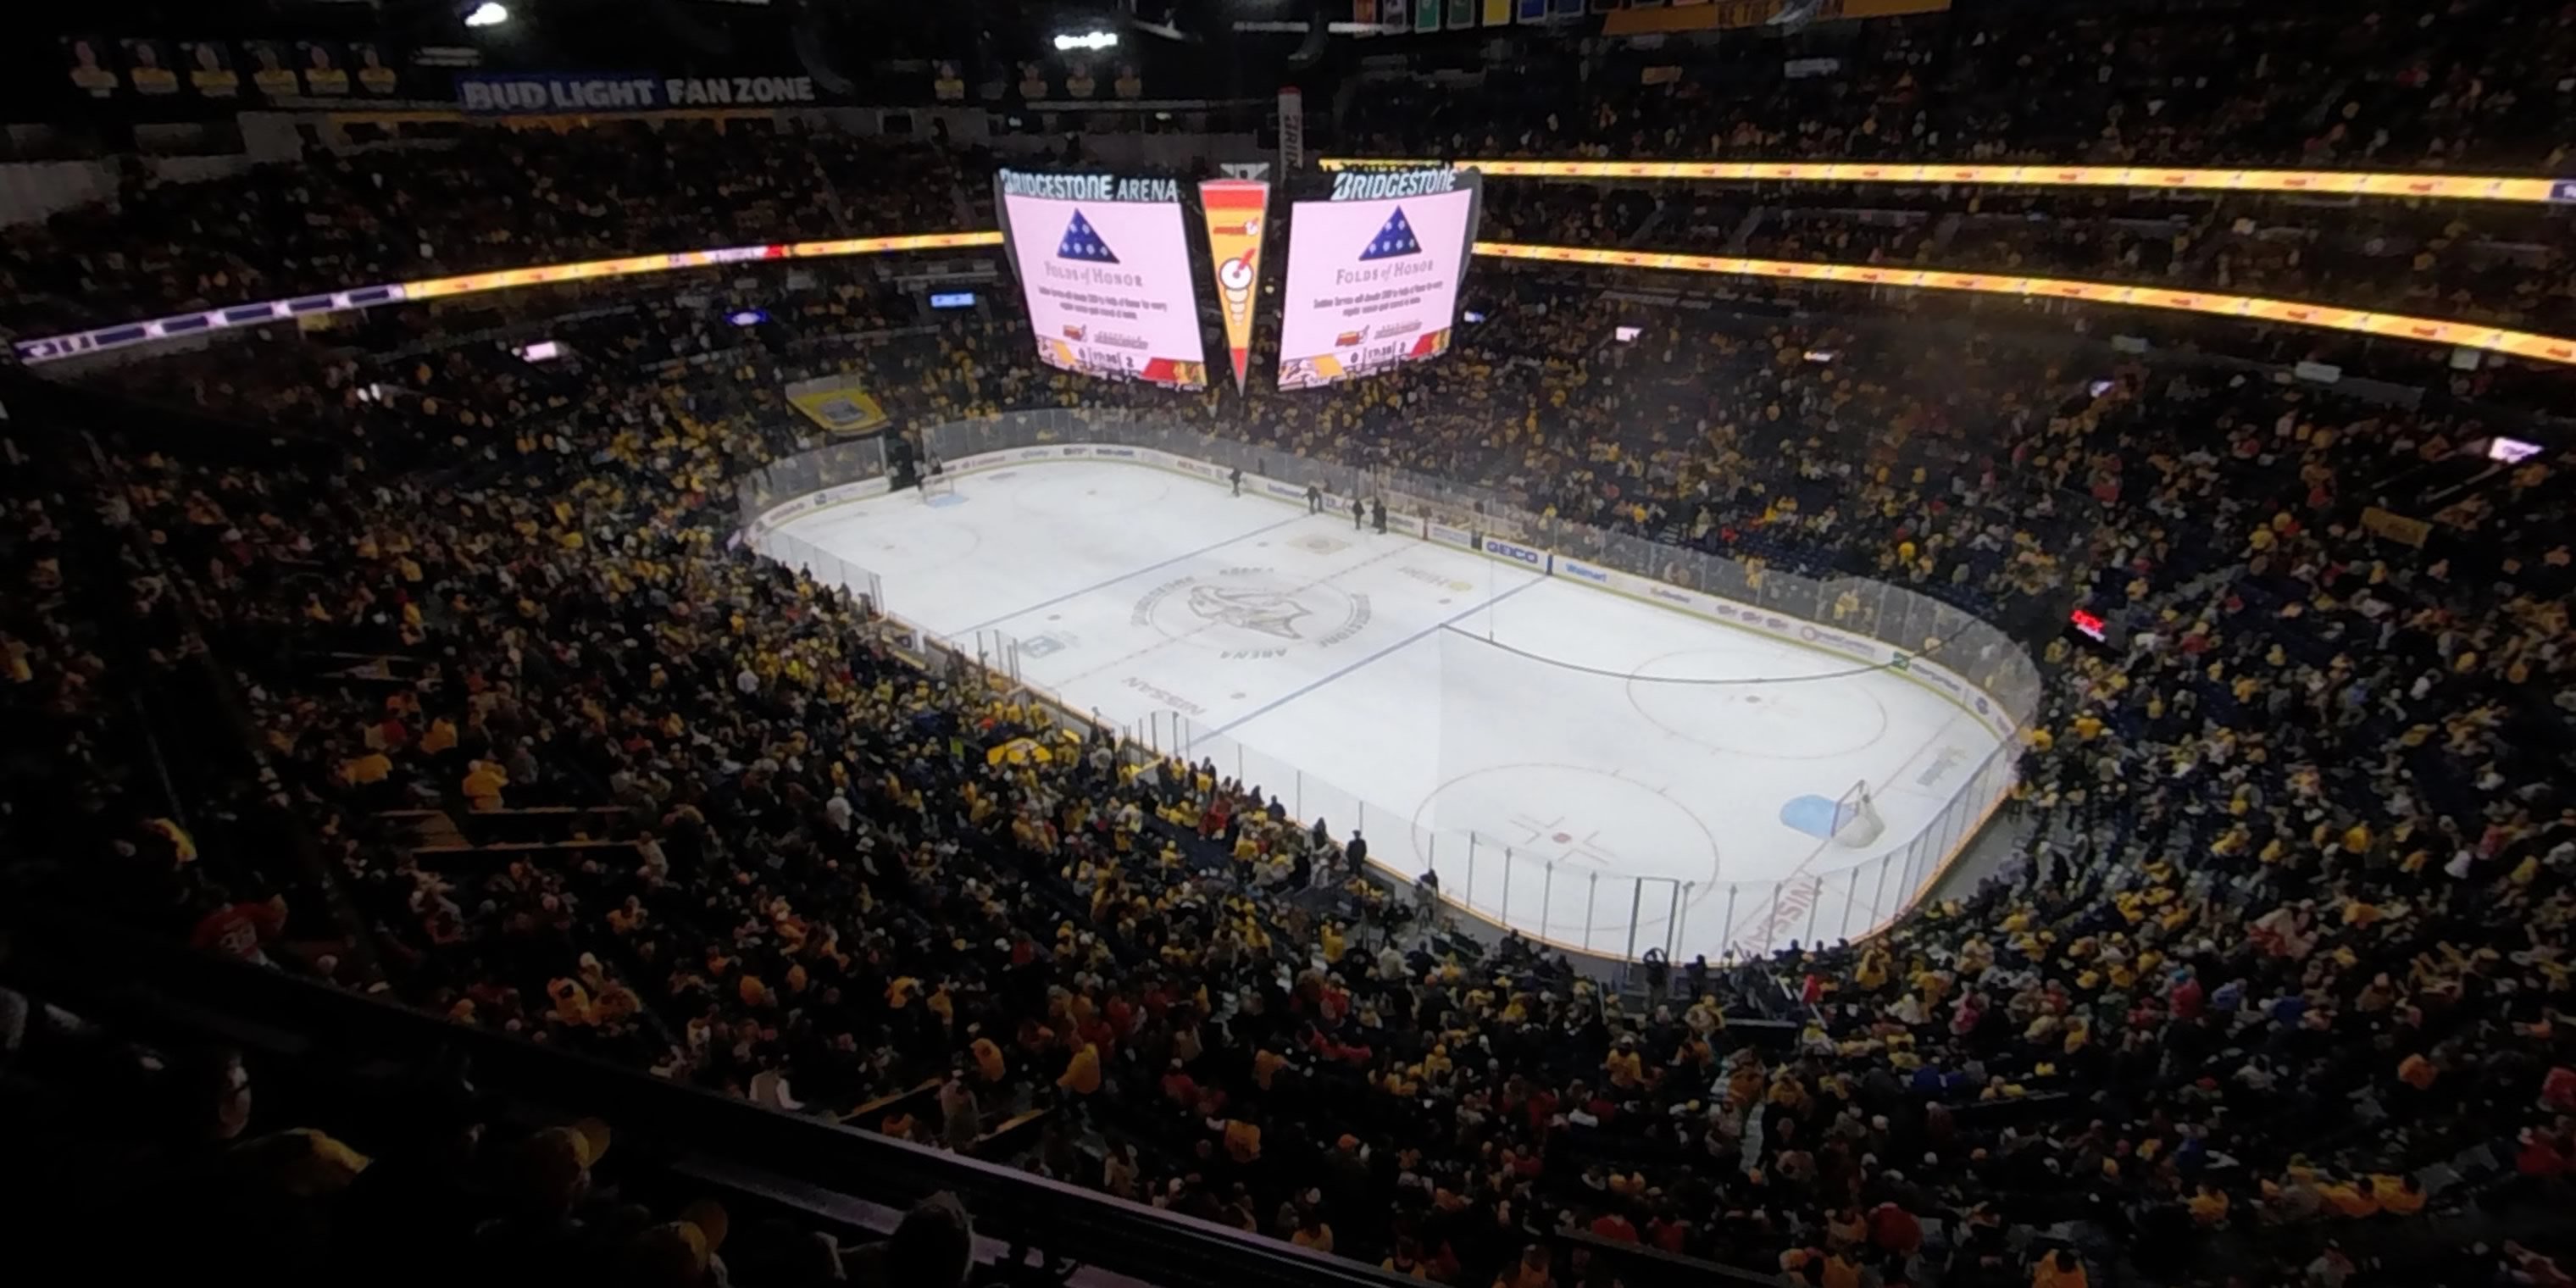 section 329 panoramic seat view  for hockey - bridgestone arena